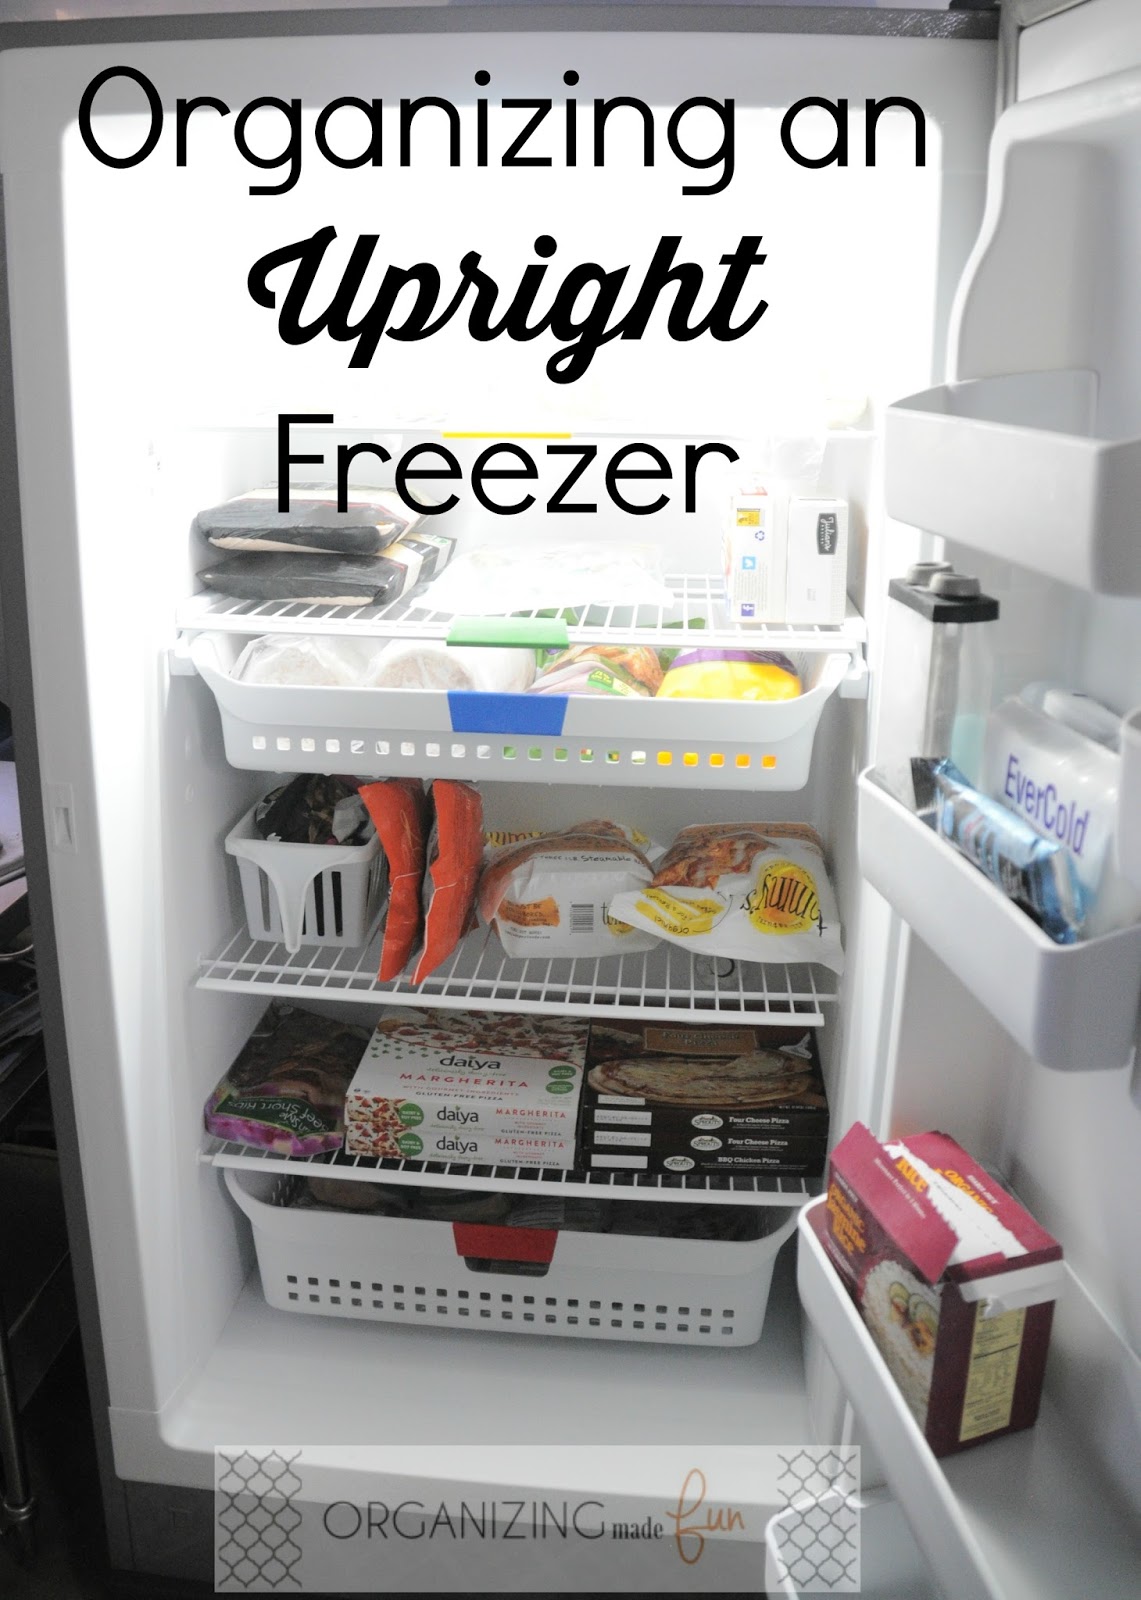 Upright Freezers in Freezers 